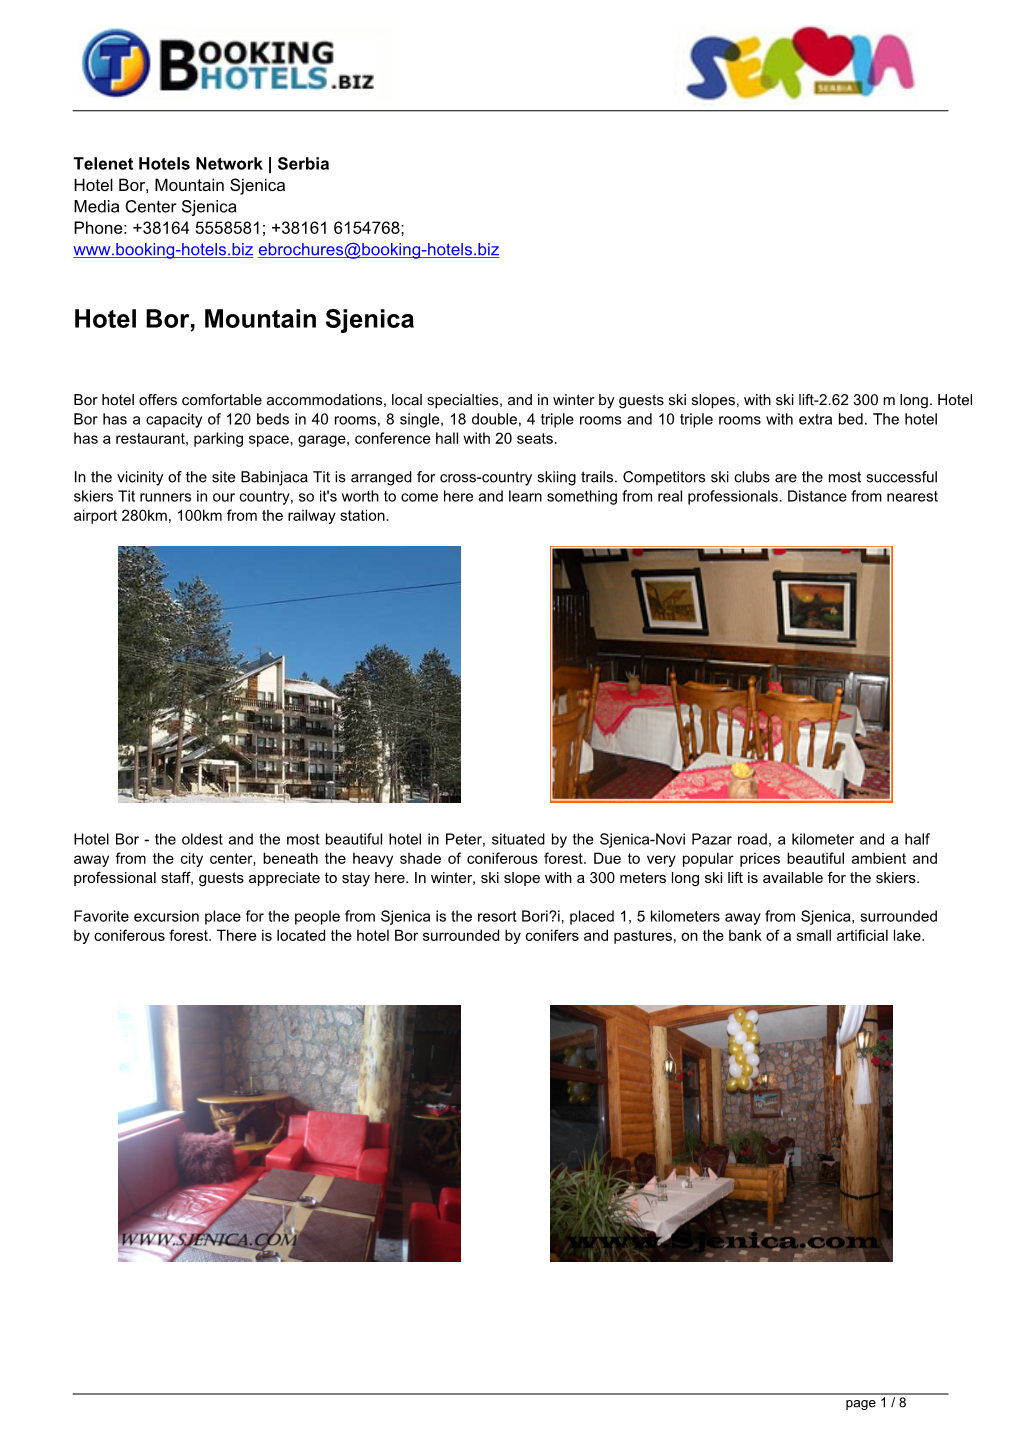 En Ebrochures 300 | Hotel Bor, Mountain Sjenica